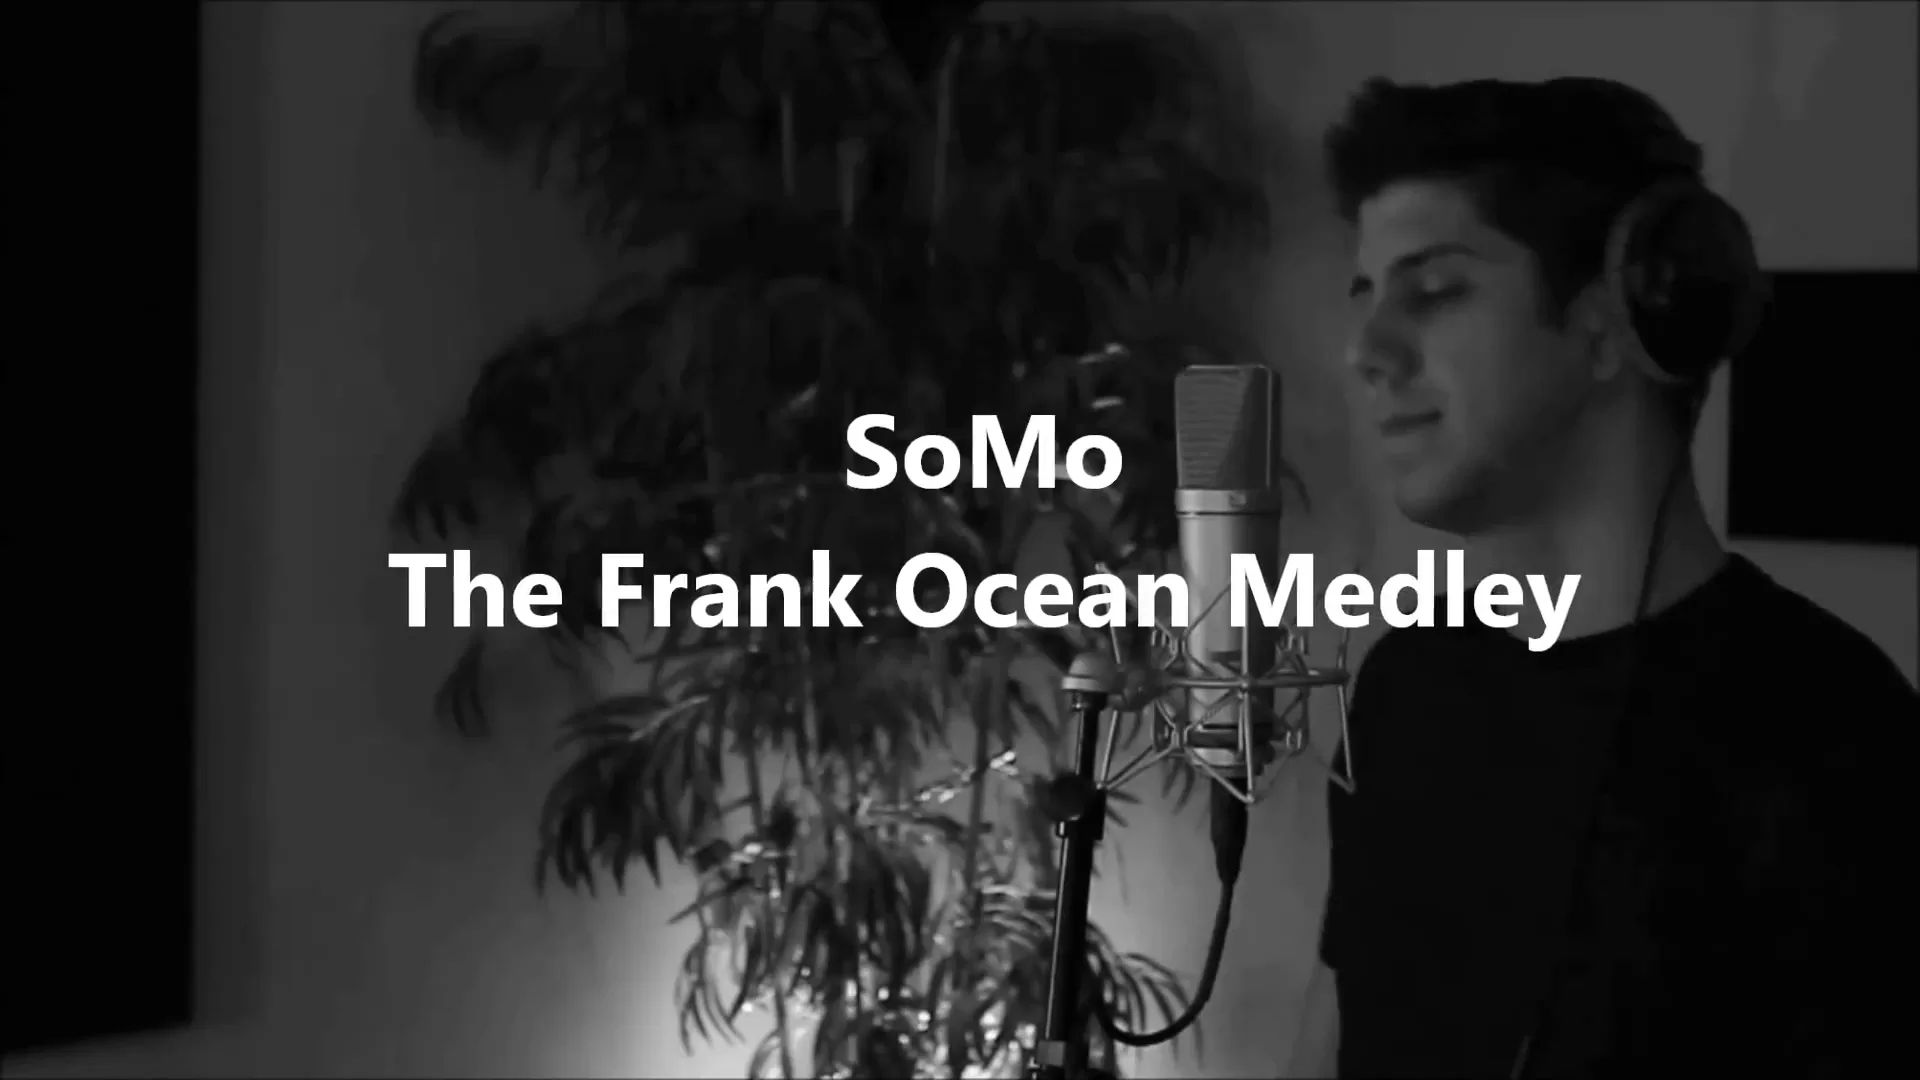 The Frank Ocean Medley by SoMo